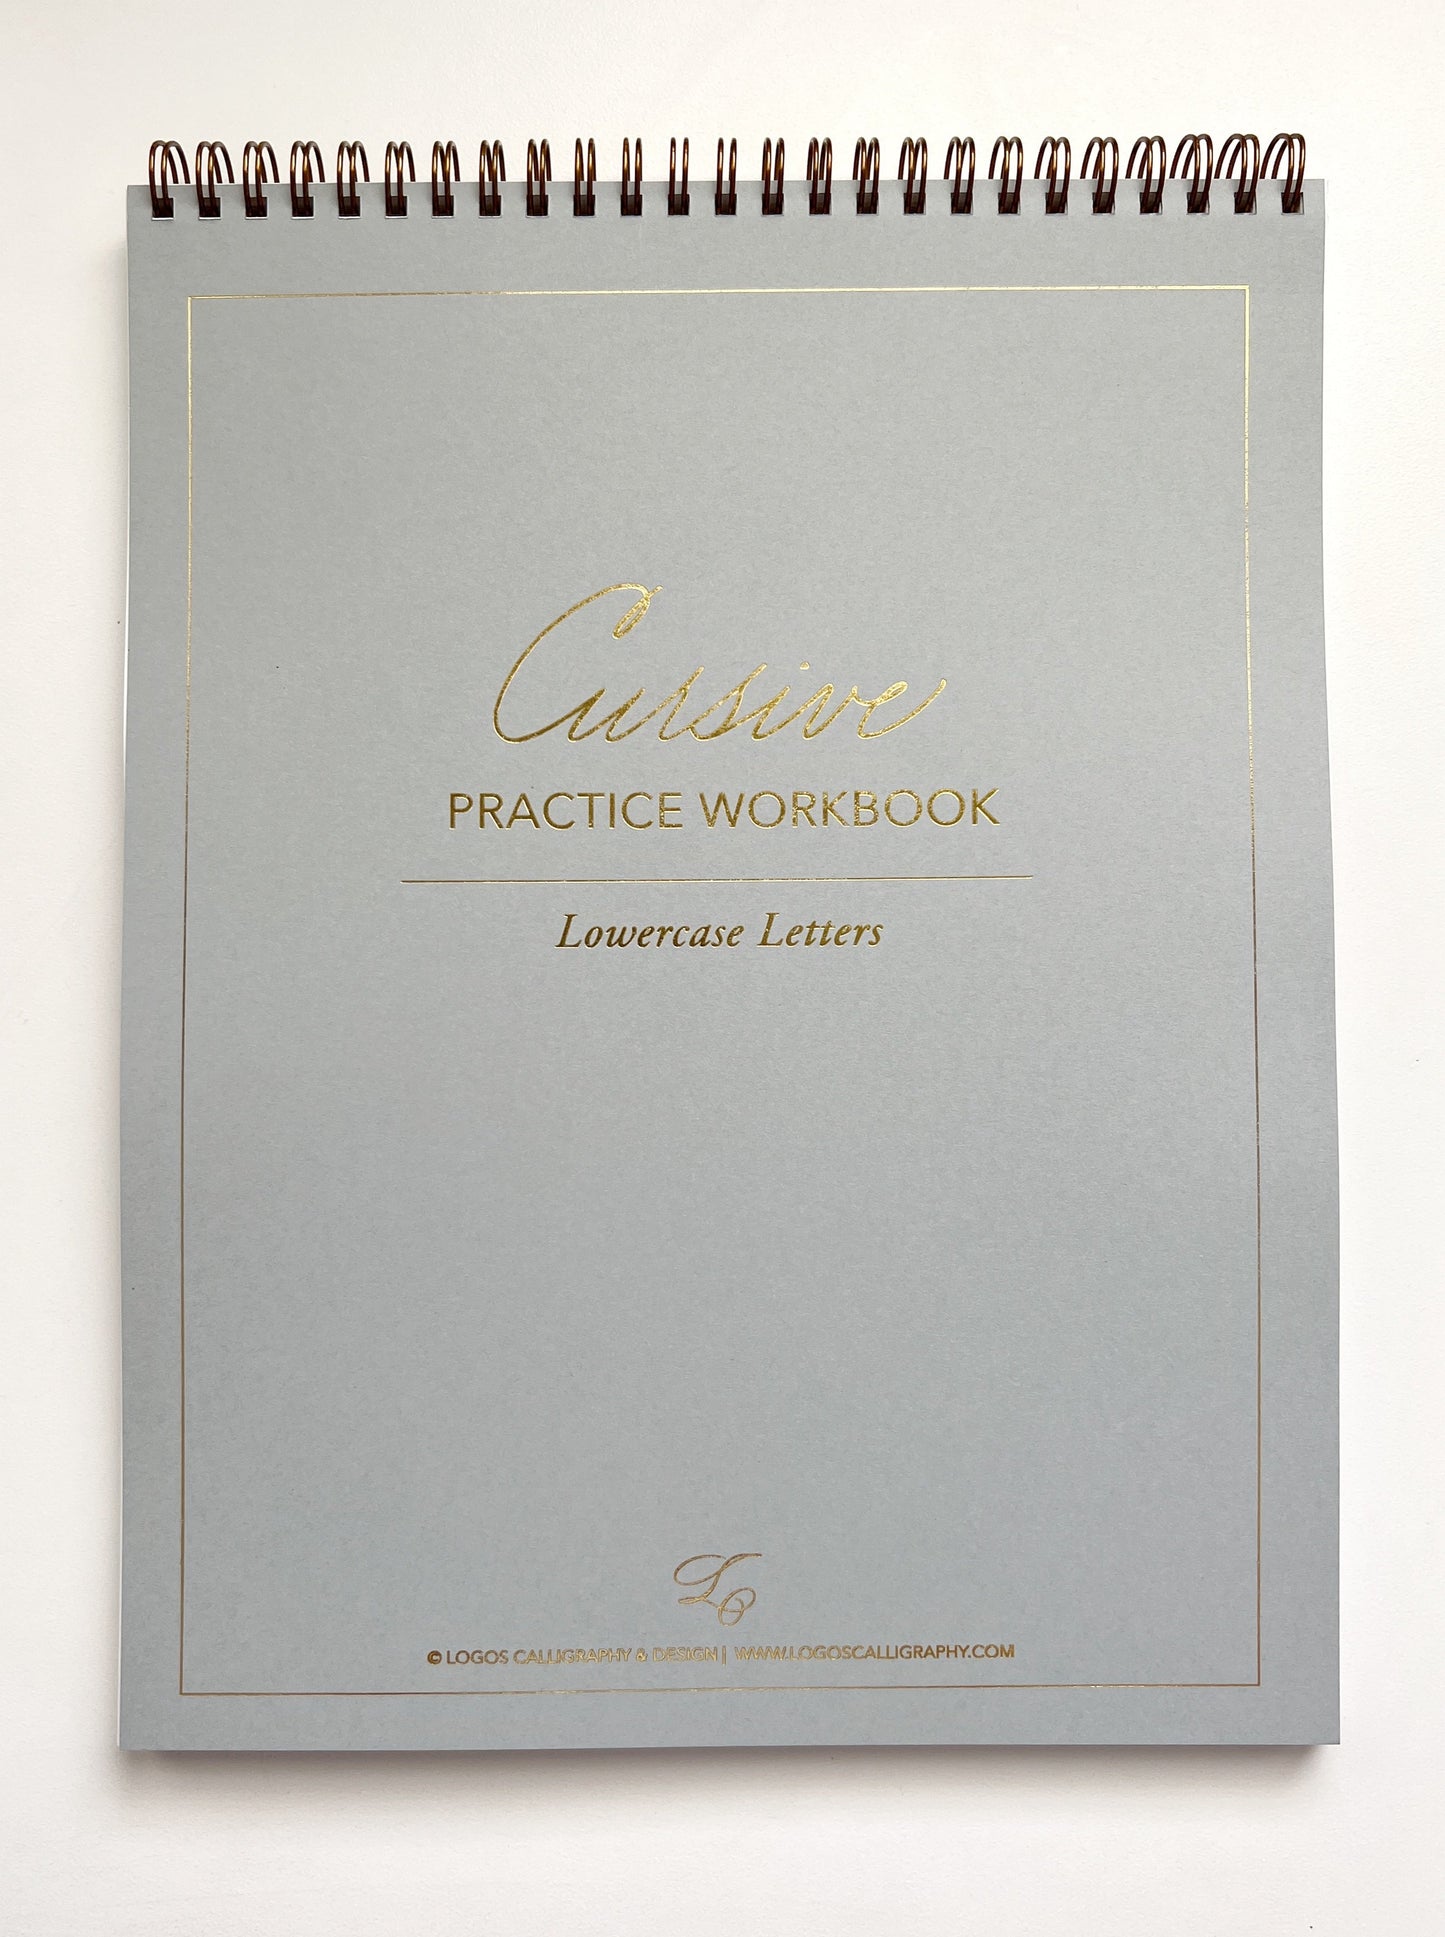 Cursive Practice Workbook - Lowercase Letters